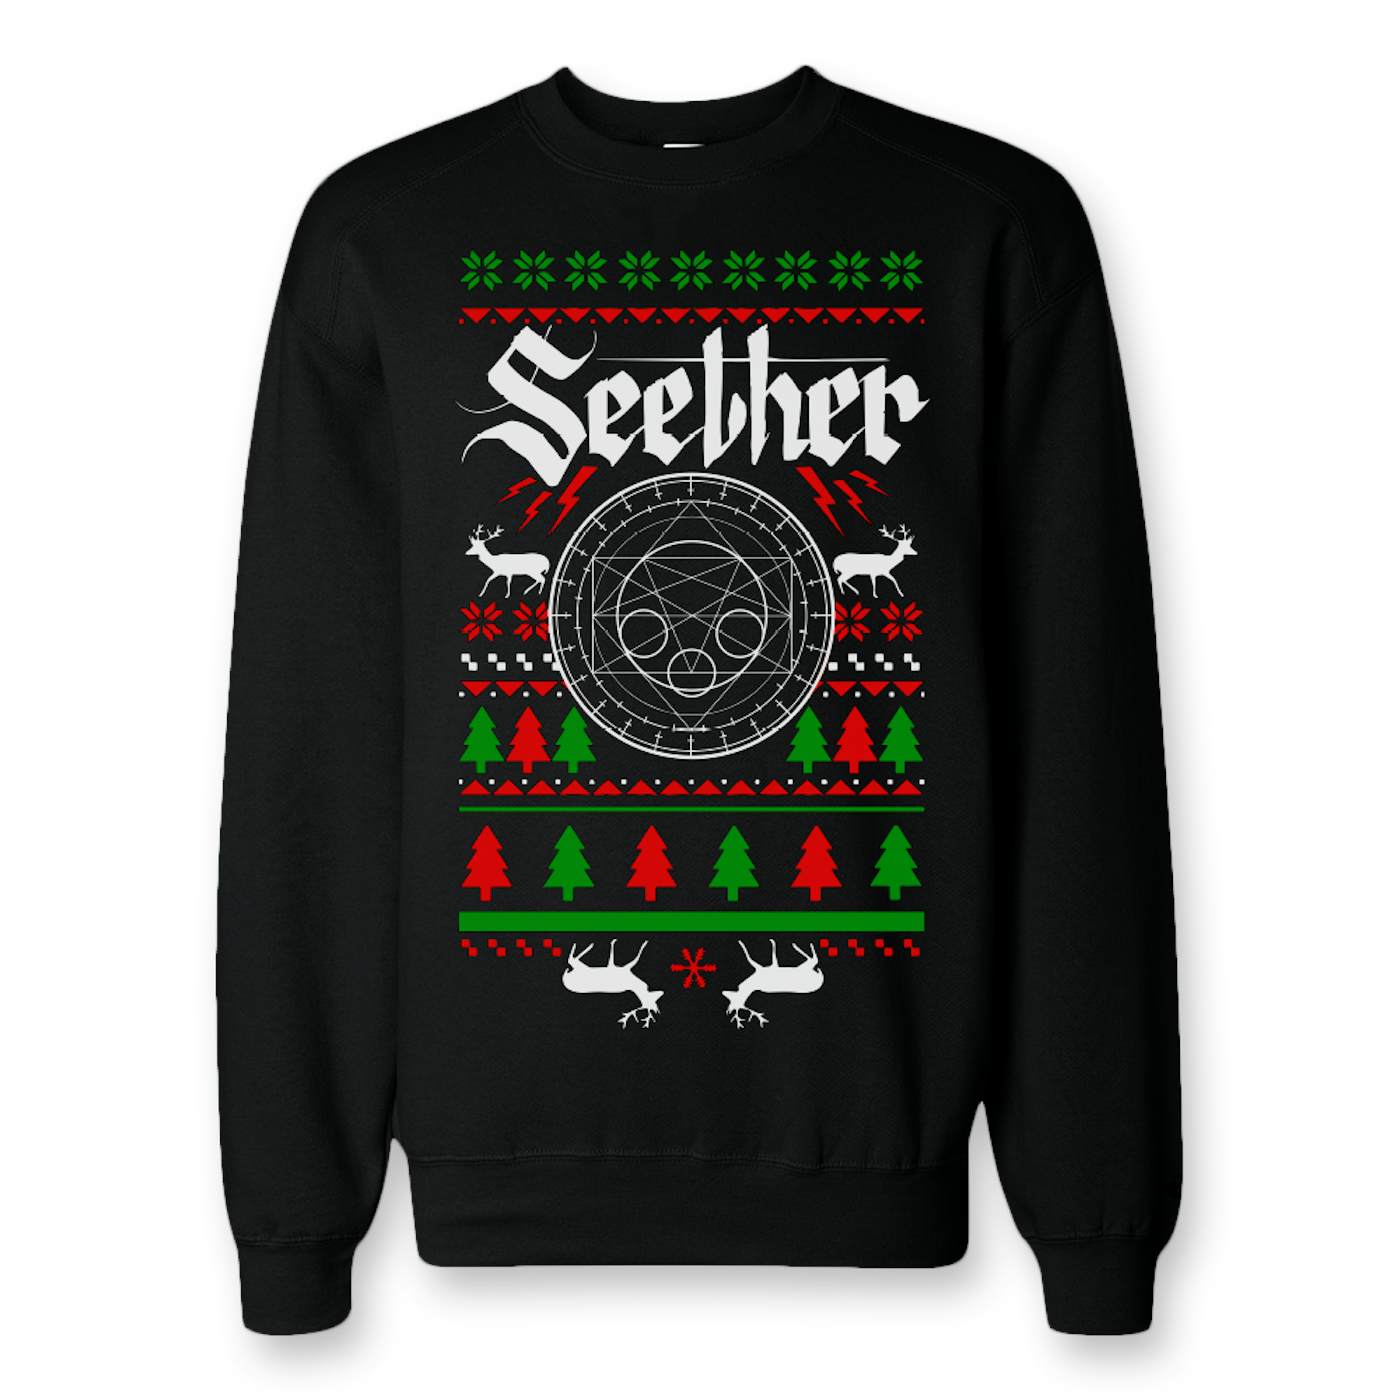 Seether 2017 Holiday Sweatshirt